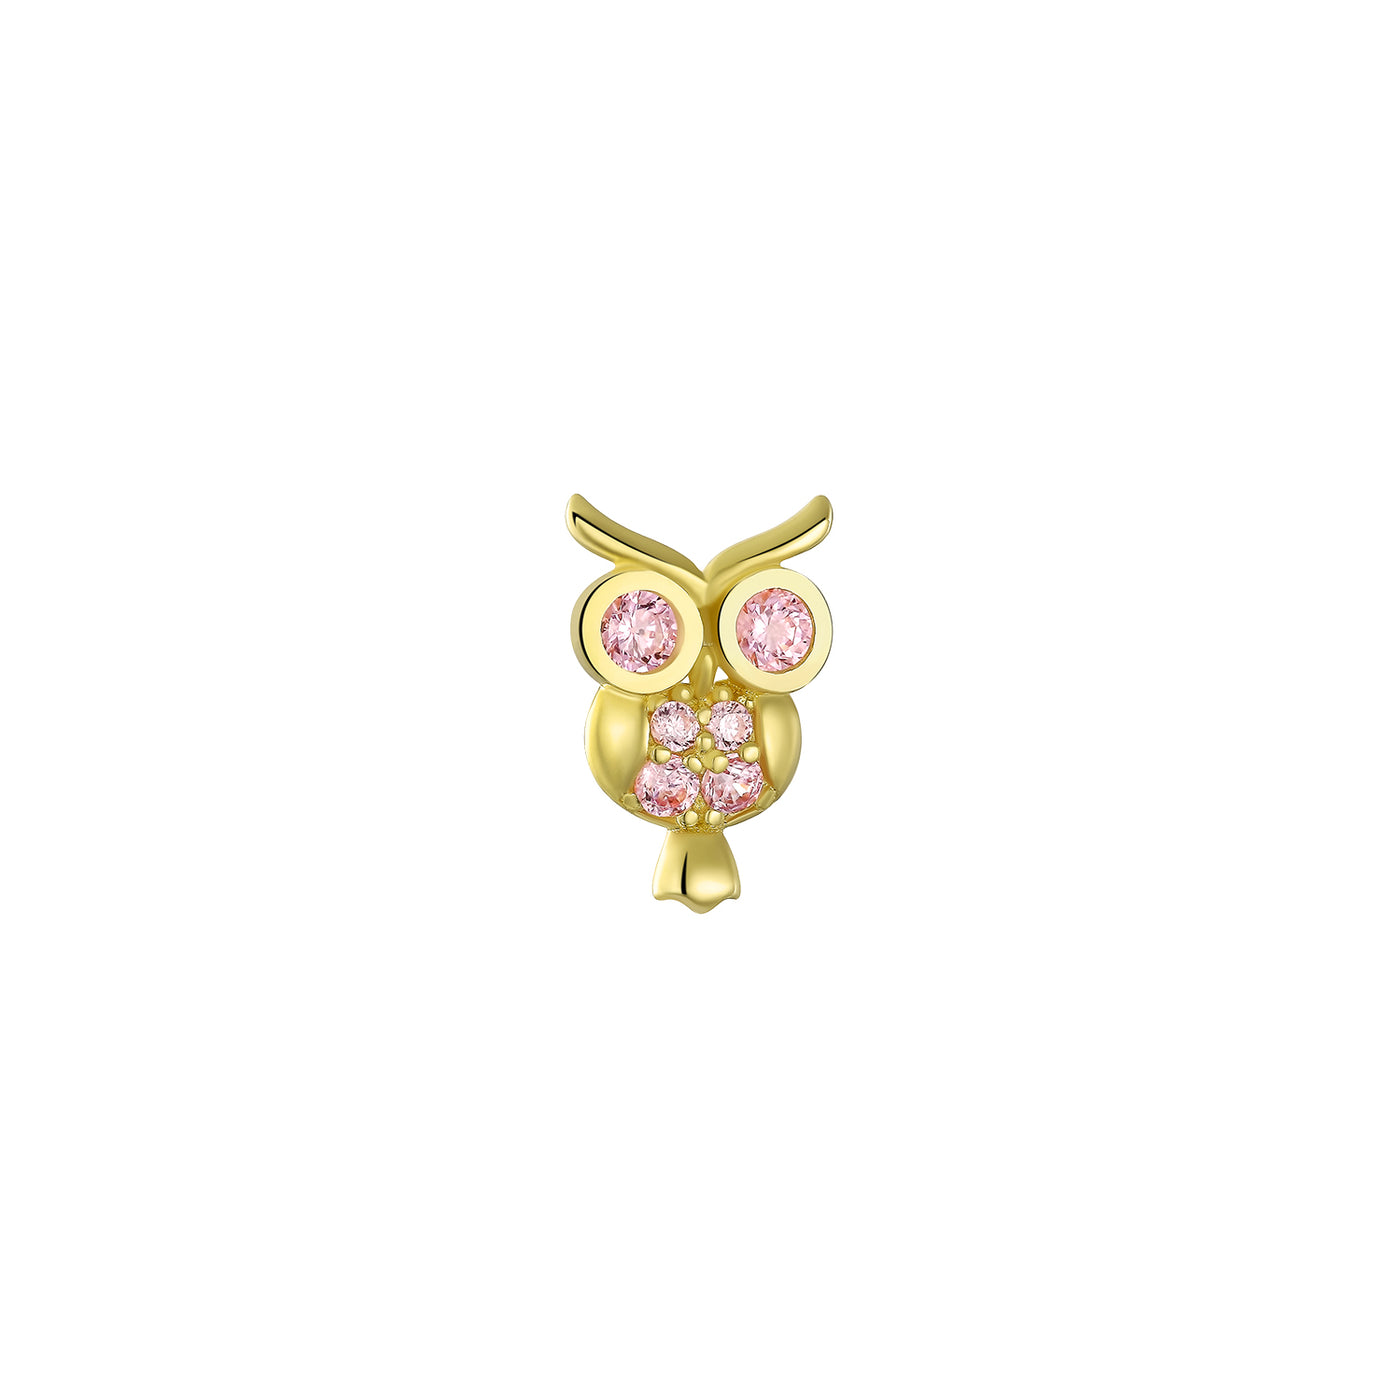 Oct-Pink Owl